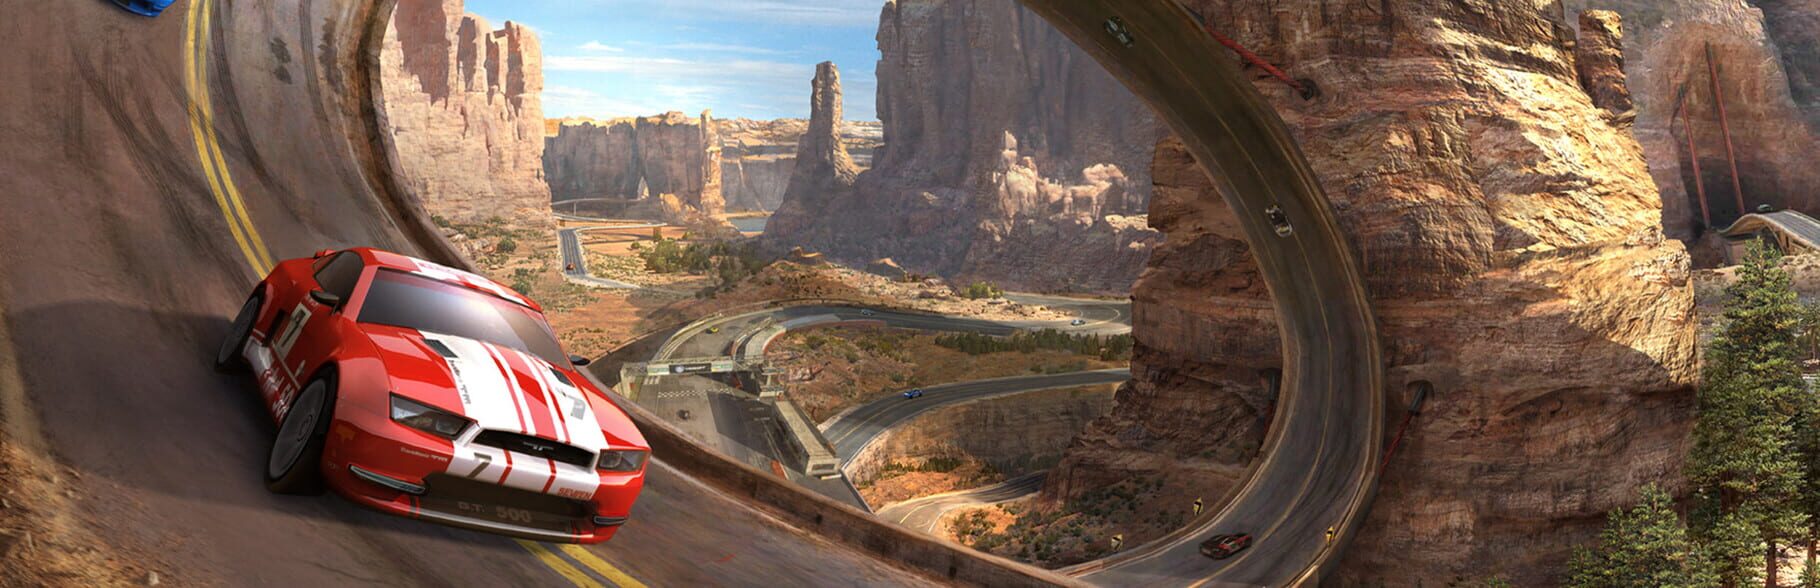 TrackMania 2: Canyon Image